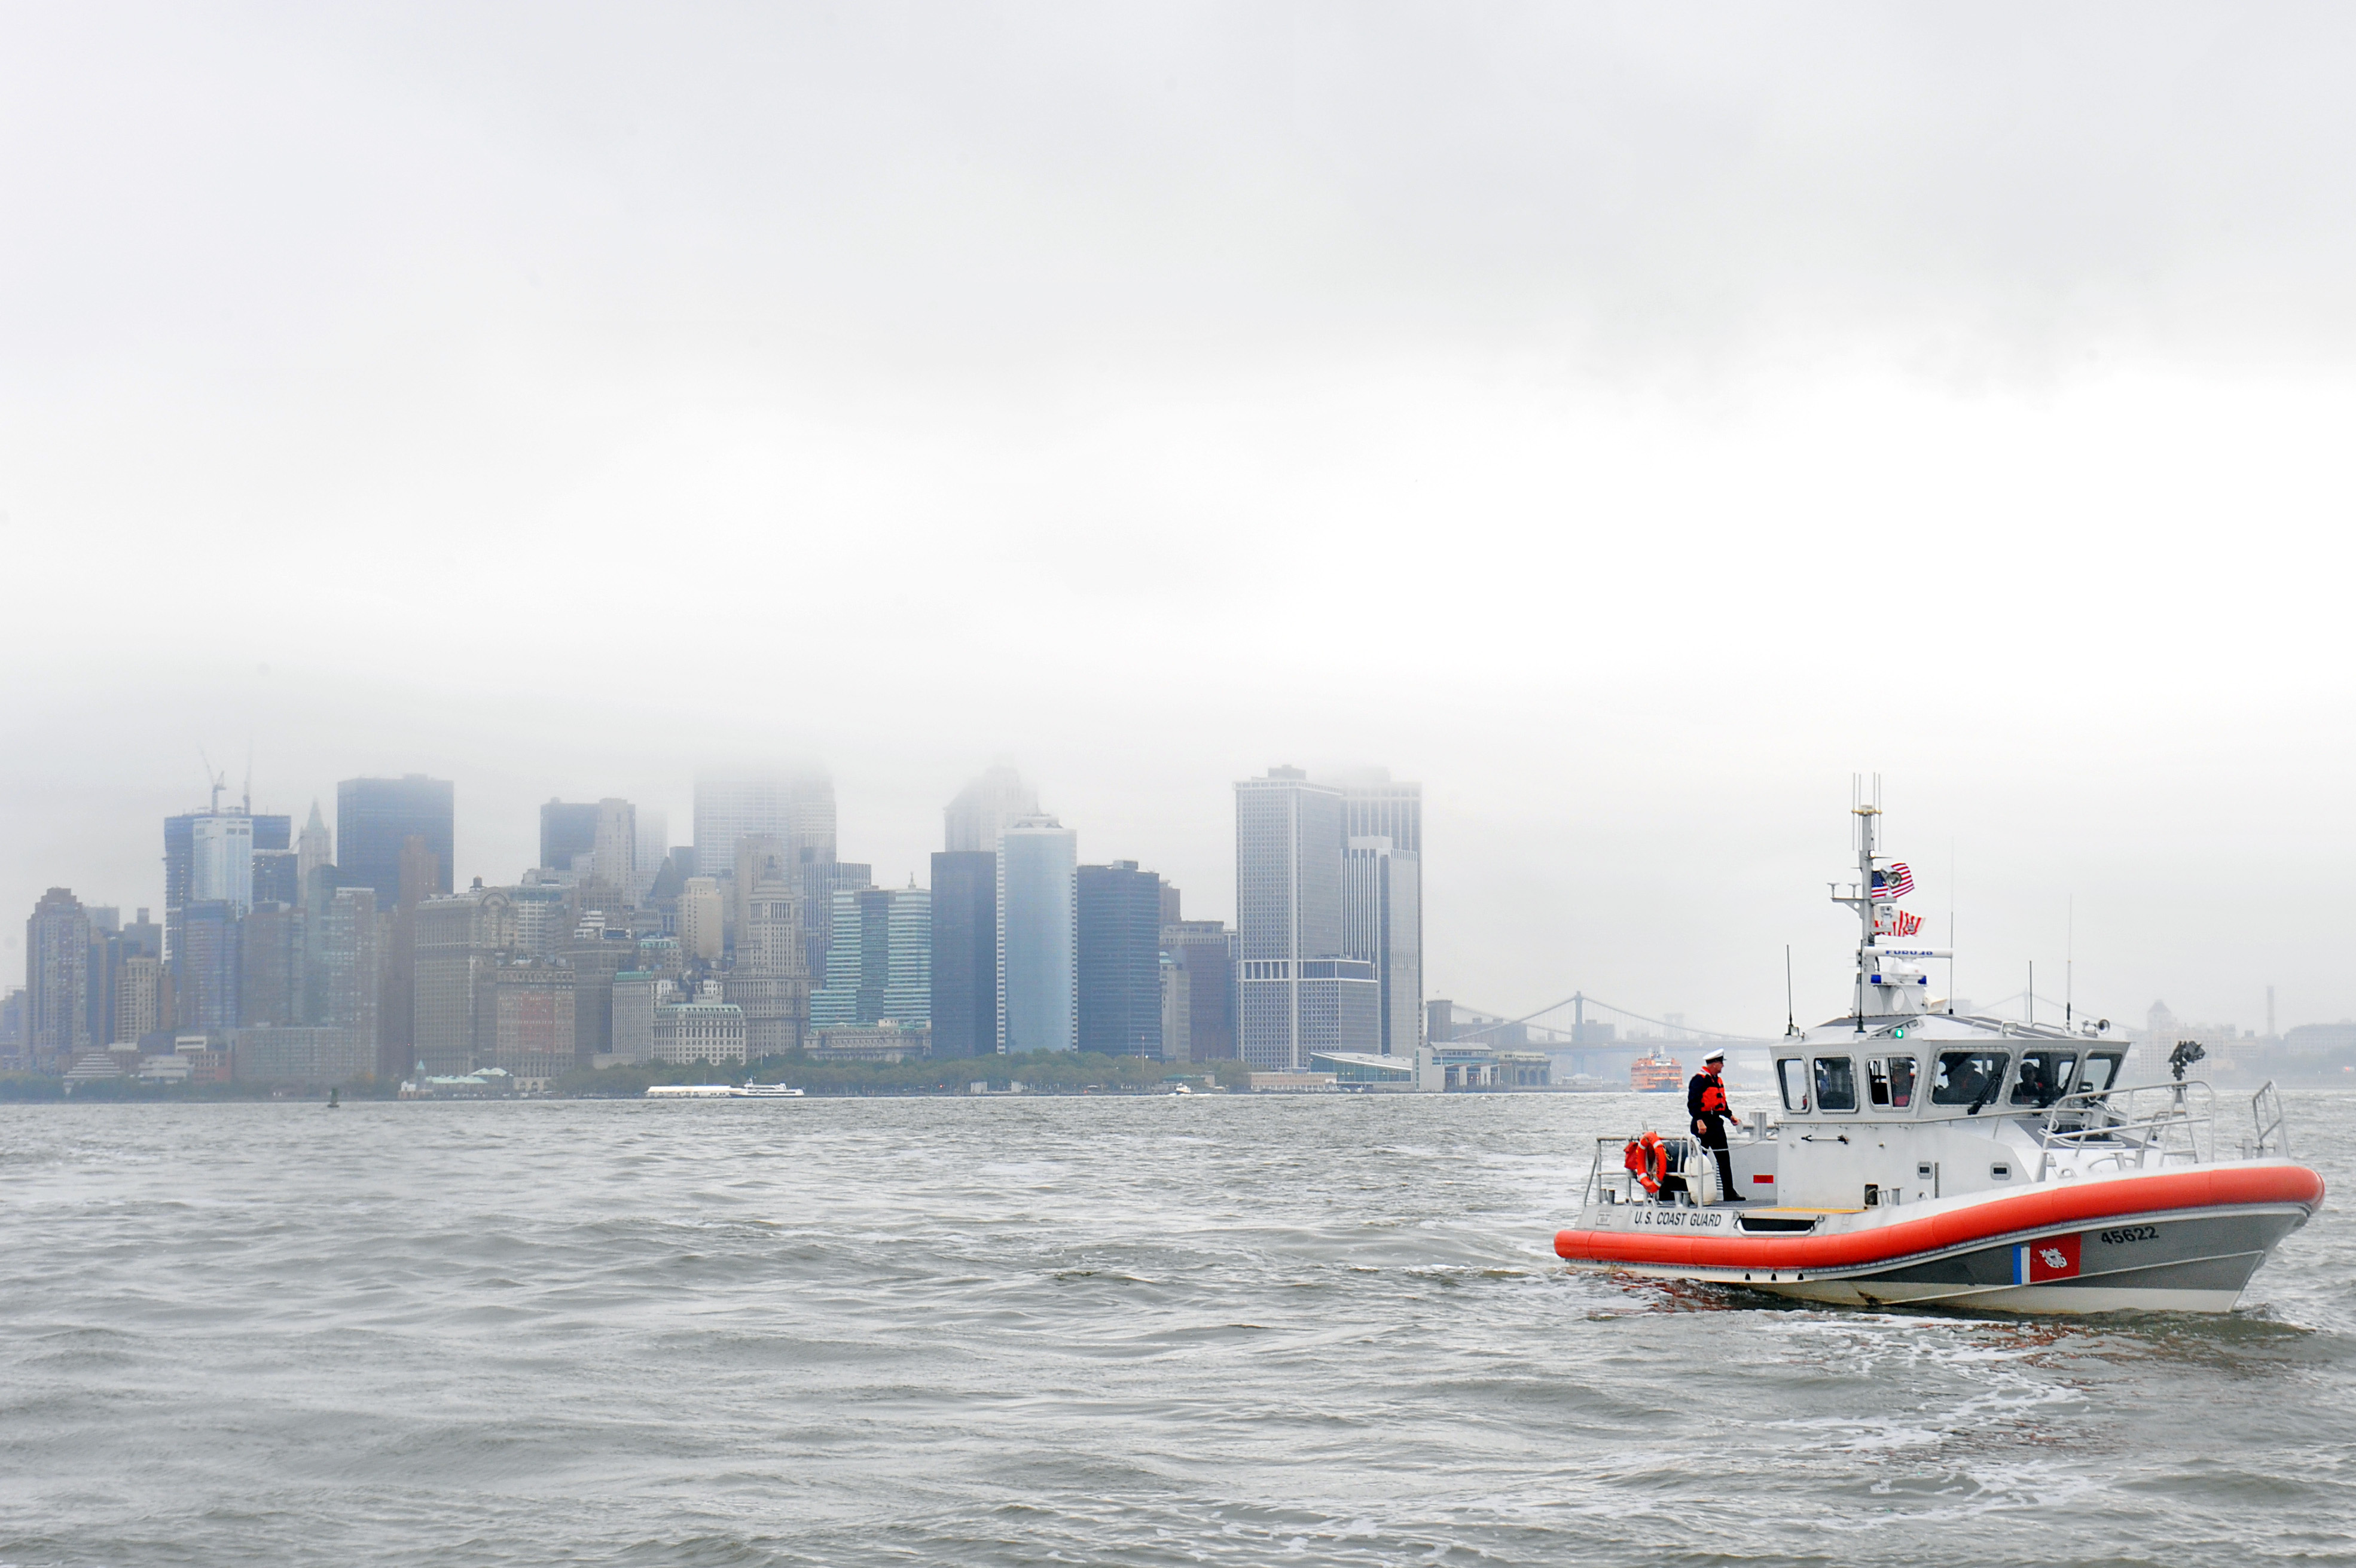 Response boats-medium prove worth across the country « Coast Guard ...